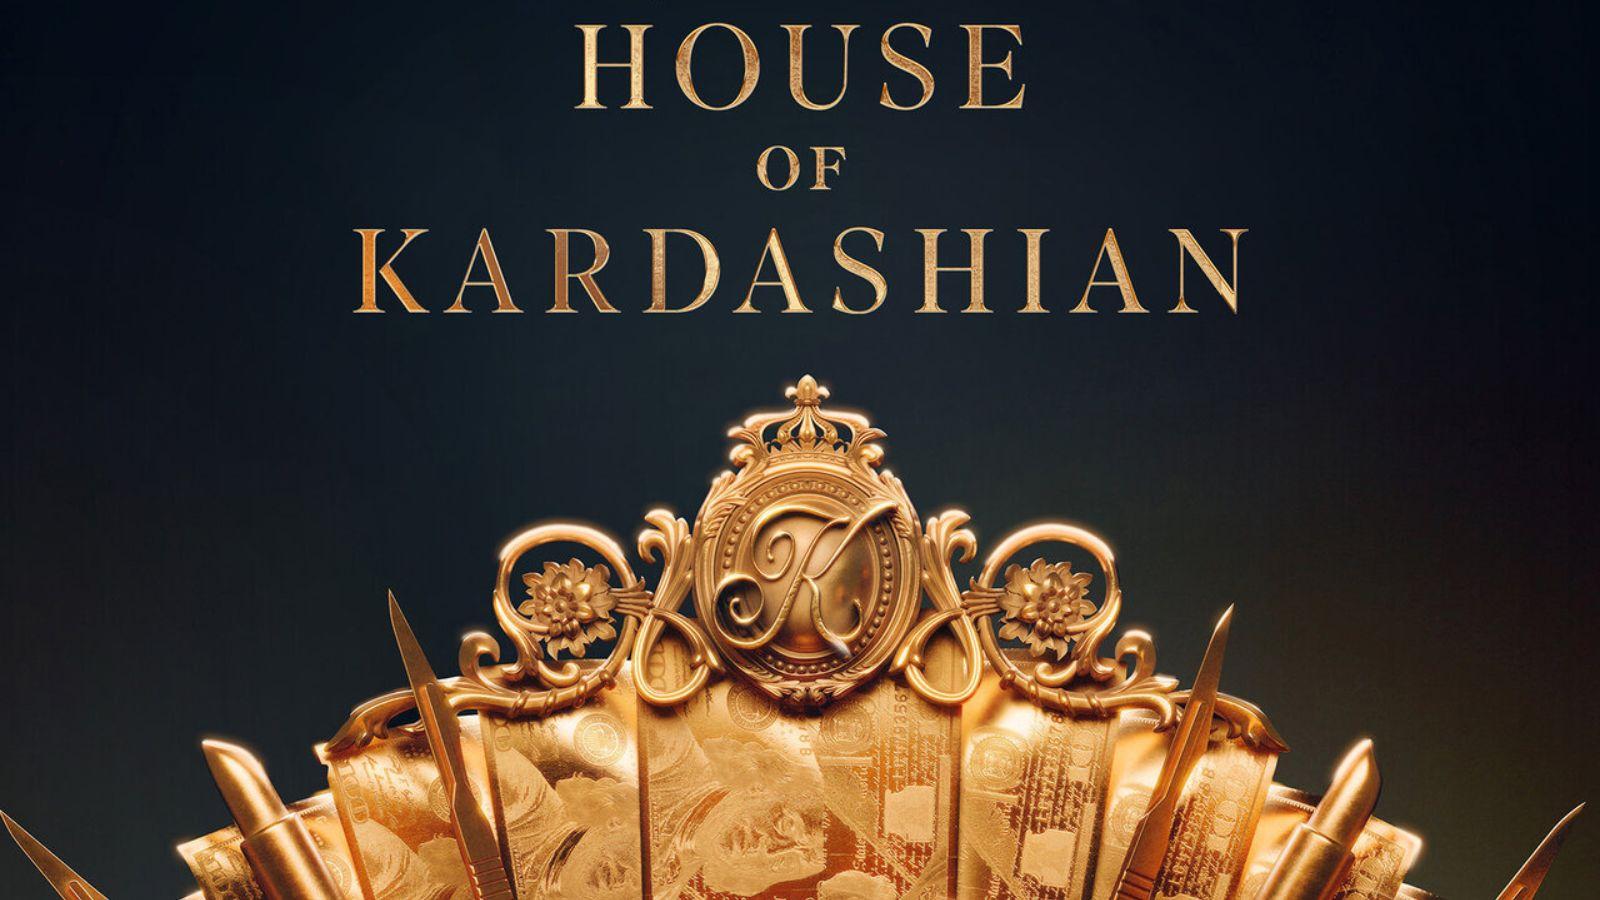 The logo for House of Kardashian